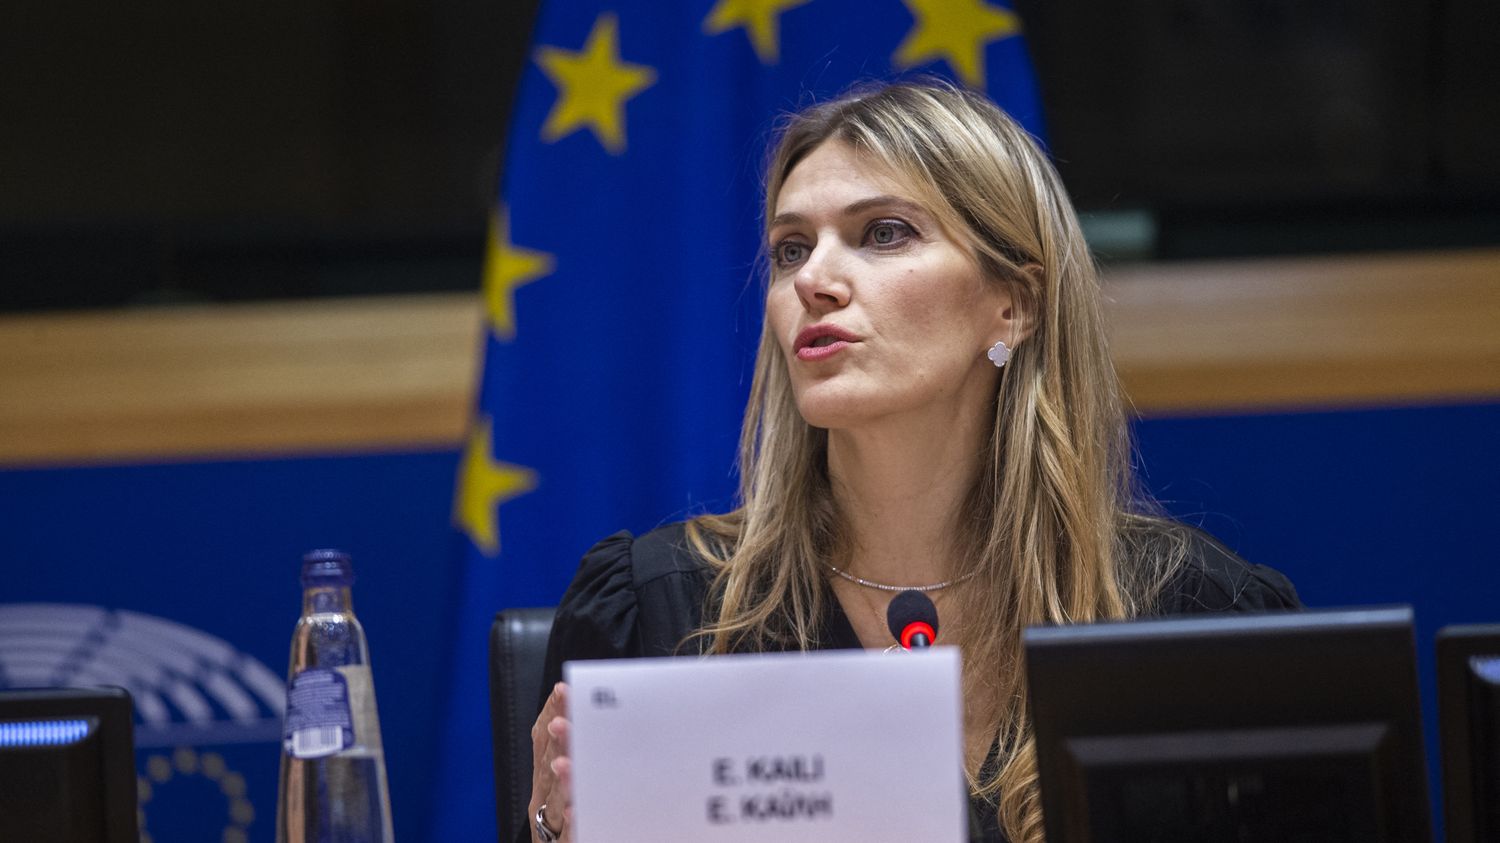 Suspicions of corruption in the European Parliament: MEP Eva Kaili authorized to remove her electronic bracelet
